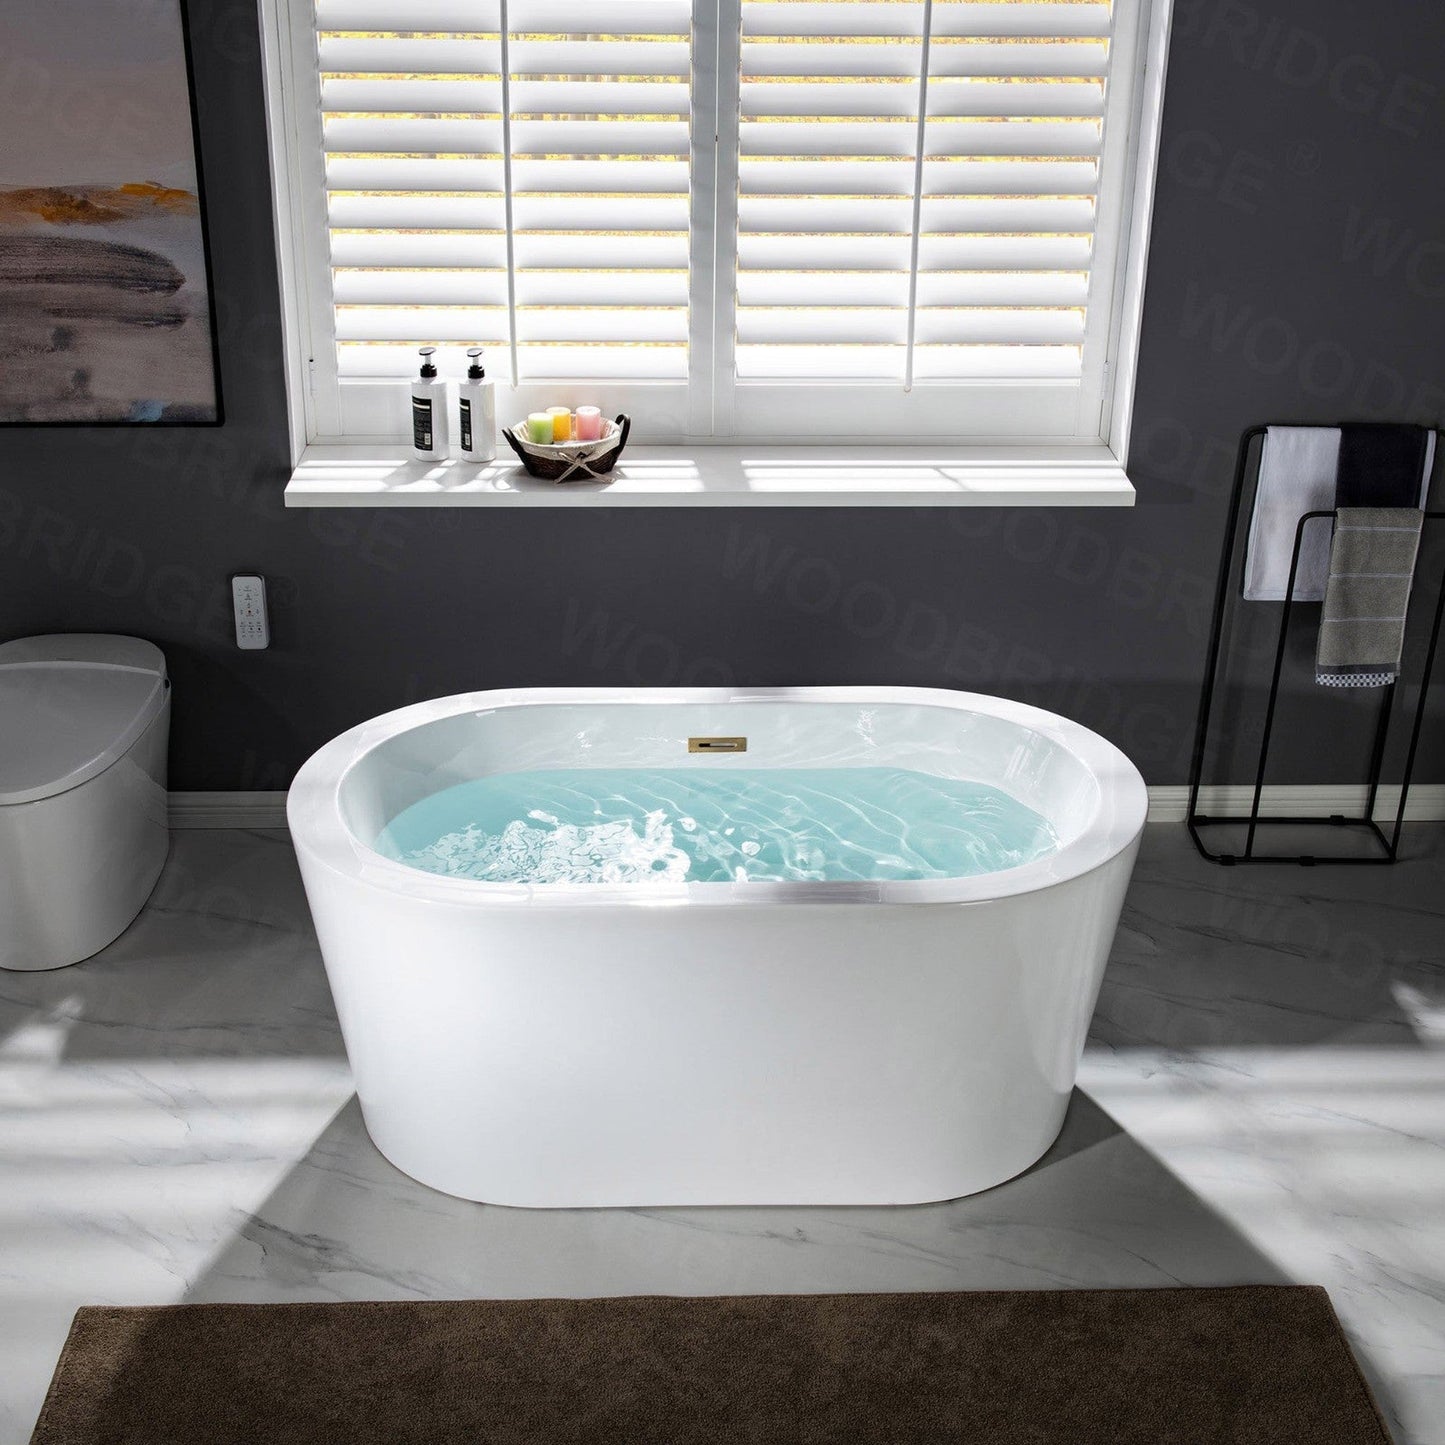 WoodBridge BTA0088 56" White Acrylic Freestanding Soaking Bathtub With Brushed Gold Drain, Overflow, F0073BGVT Tub Filler and Caddy Tray